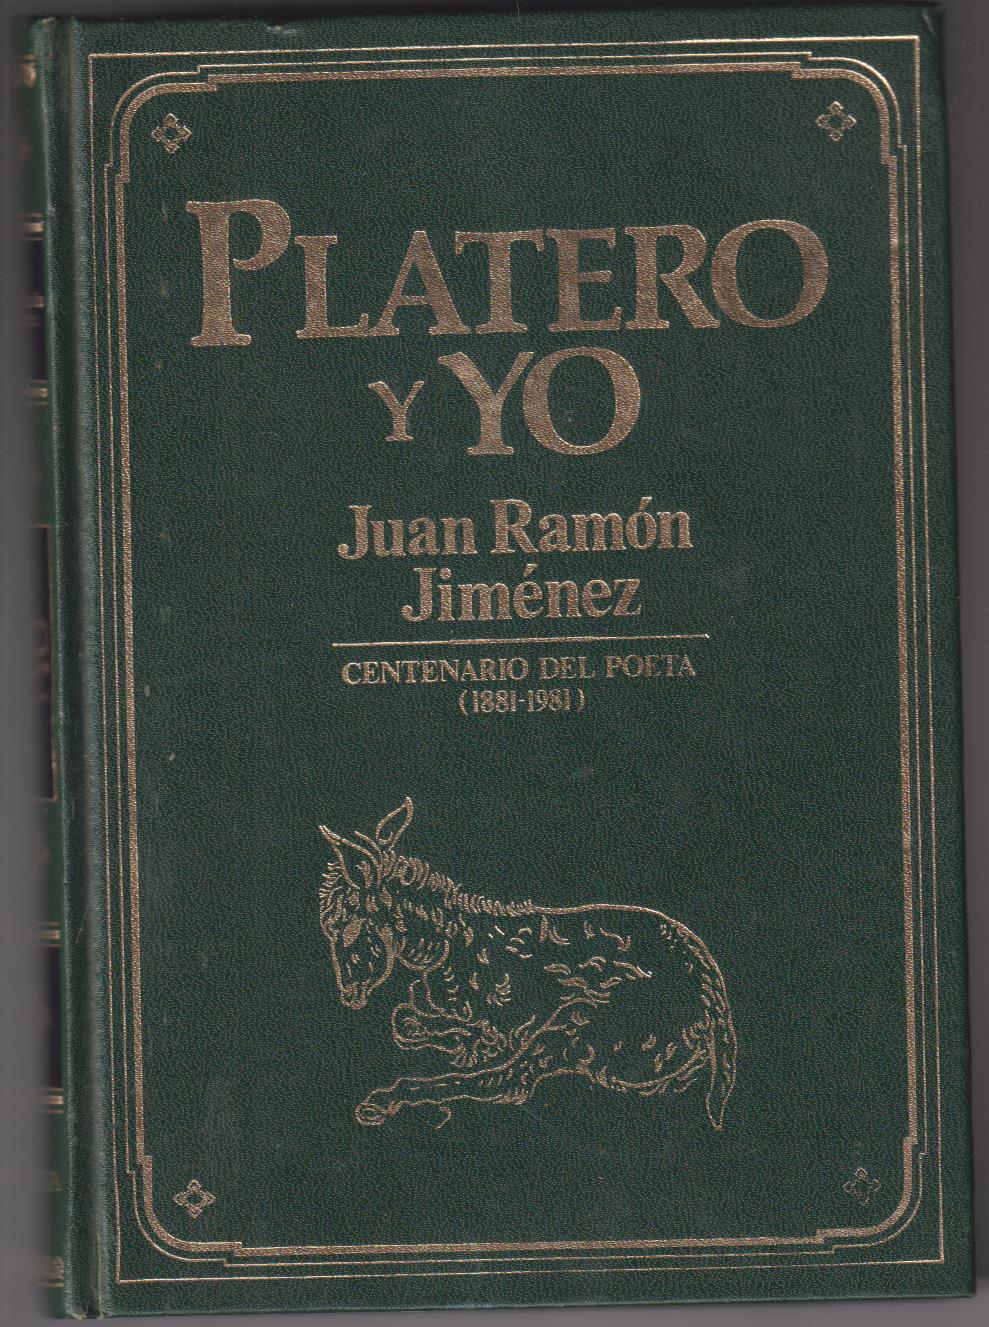 Juan Ramón Jiménez. Platero y Yo. Nauta 1981